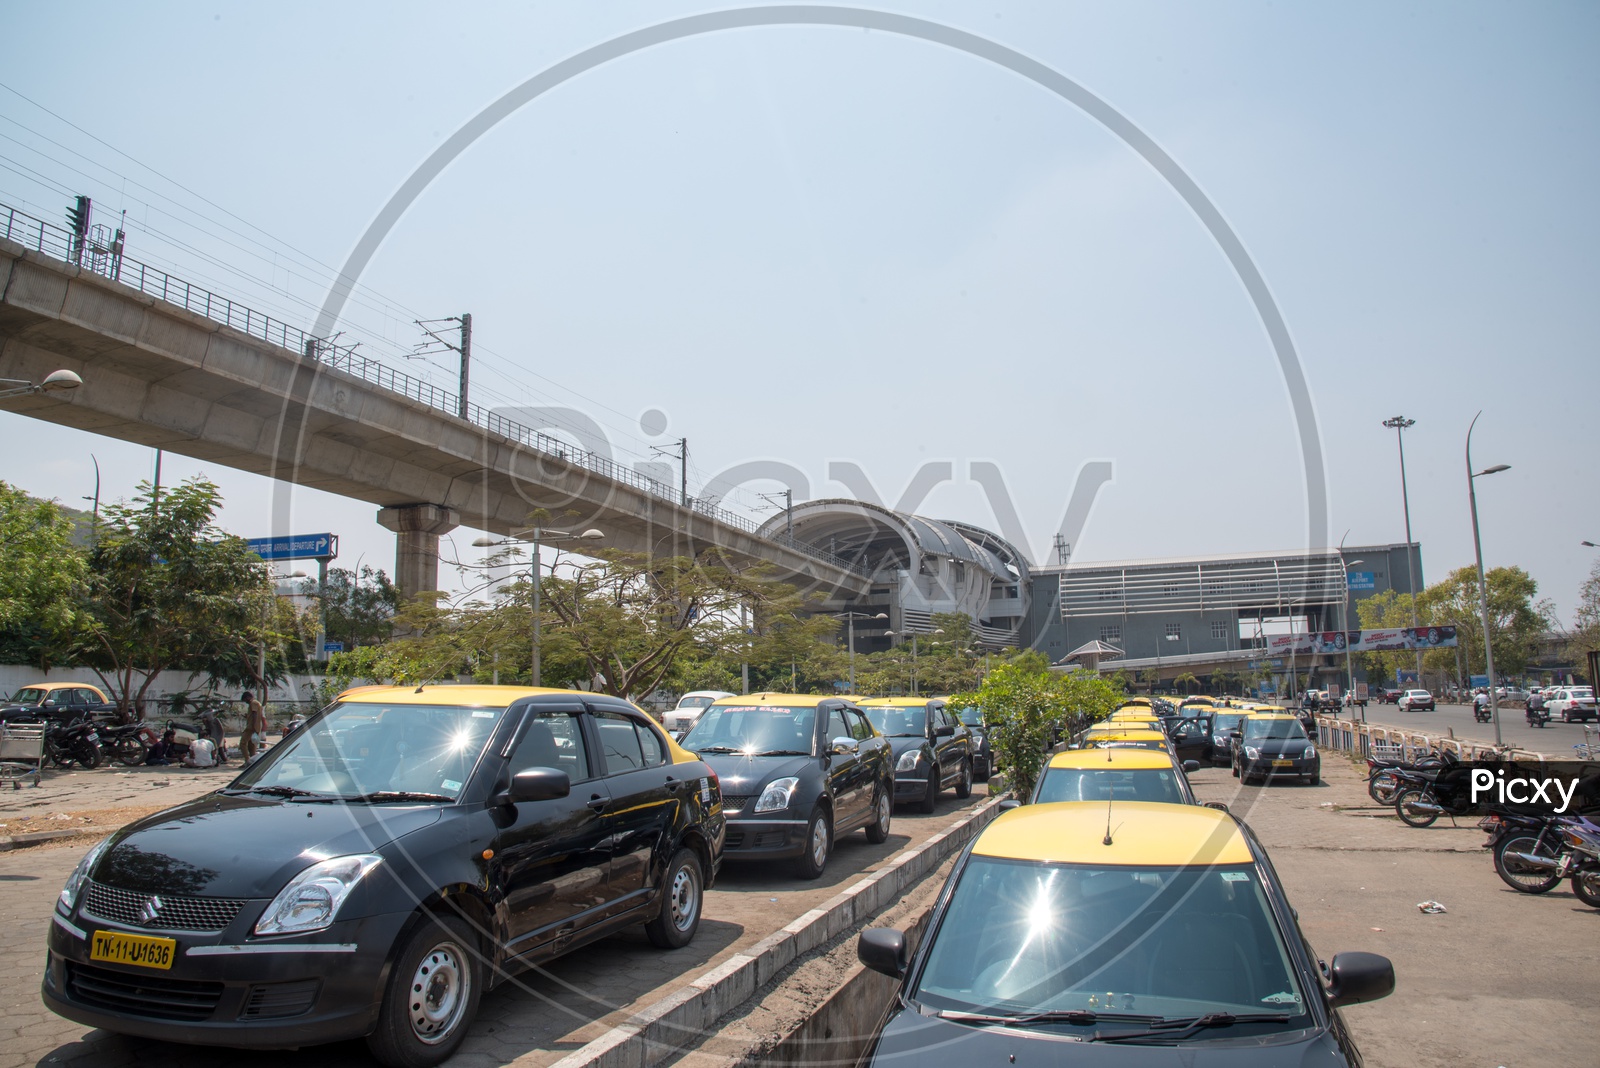 Airport Metro Station and Black Cabs at Chennai Airport.